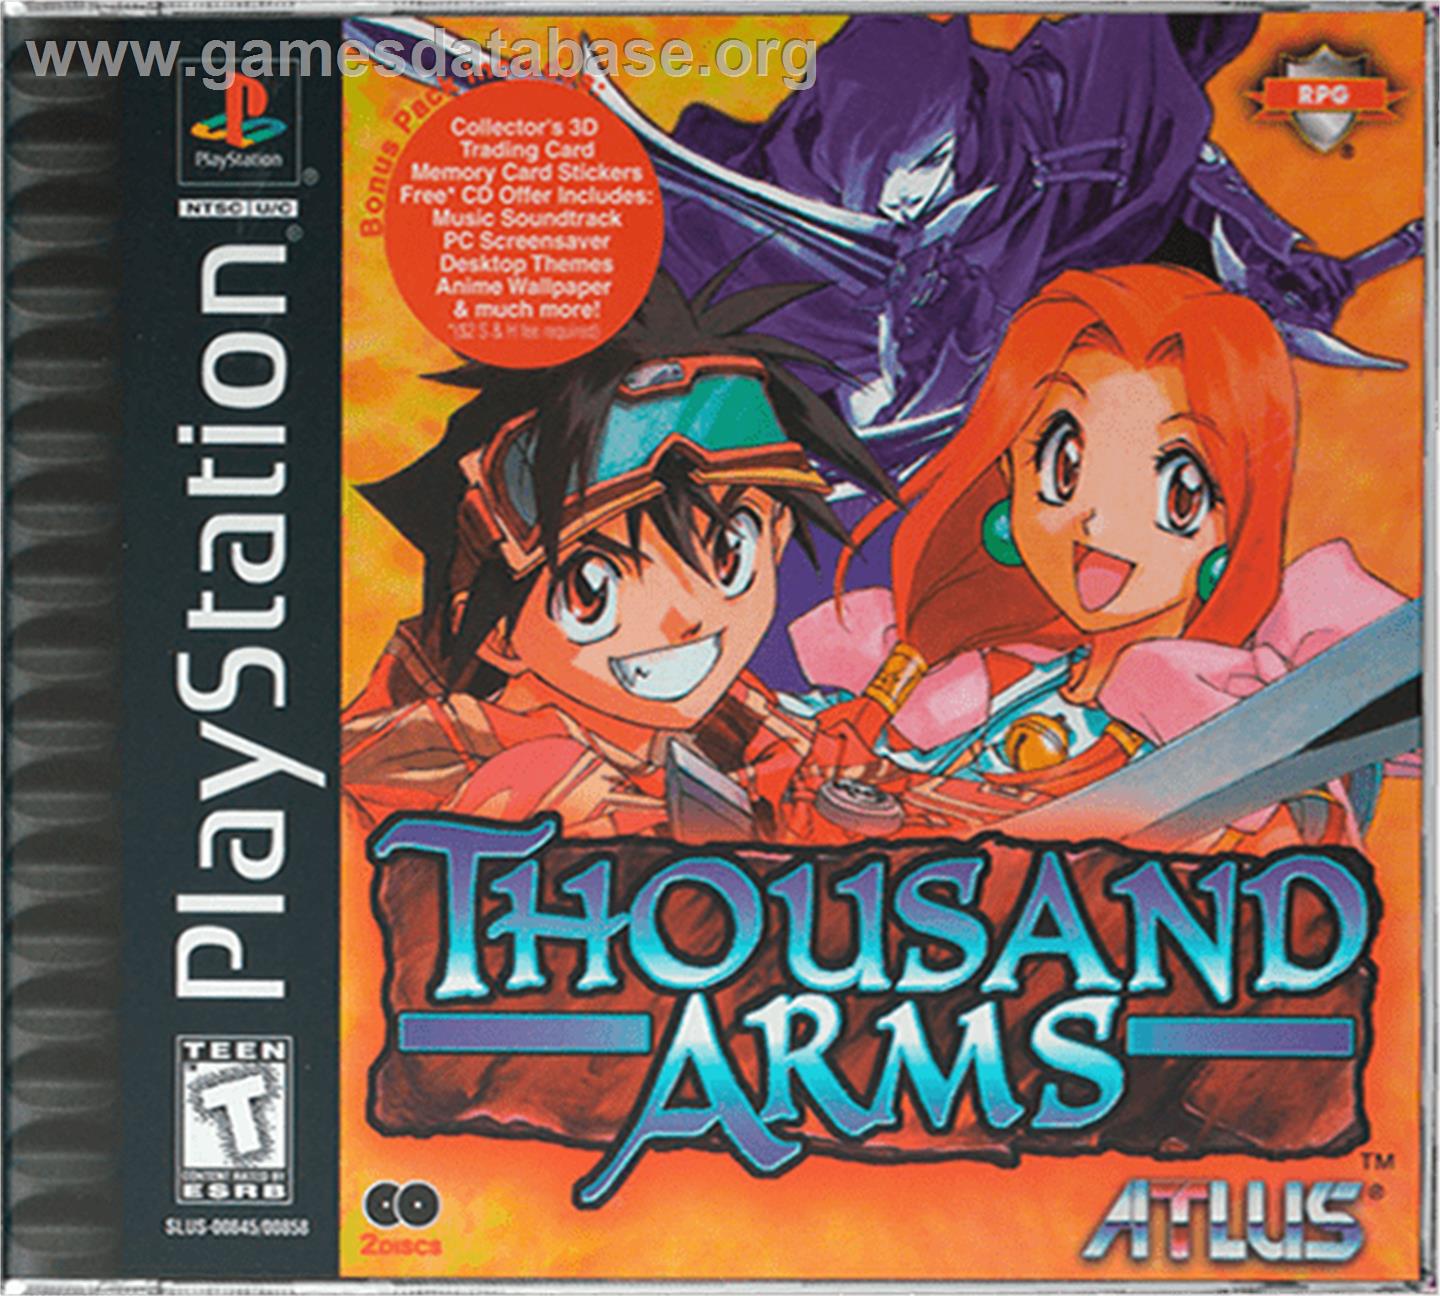 Thousand Arms - Sony Playstation - Artwork - Box